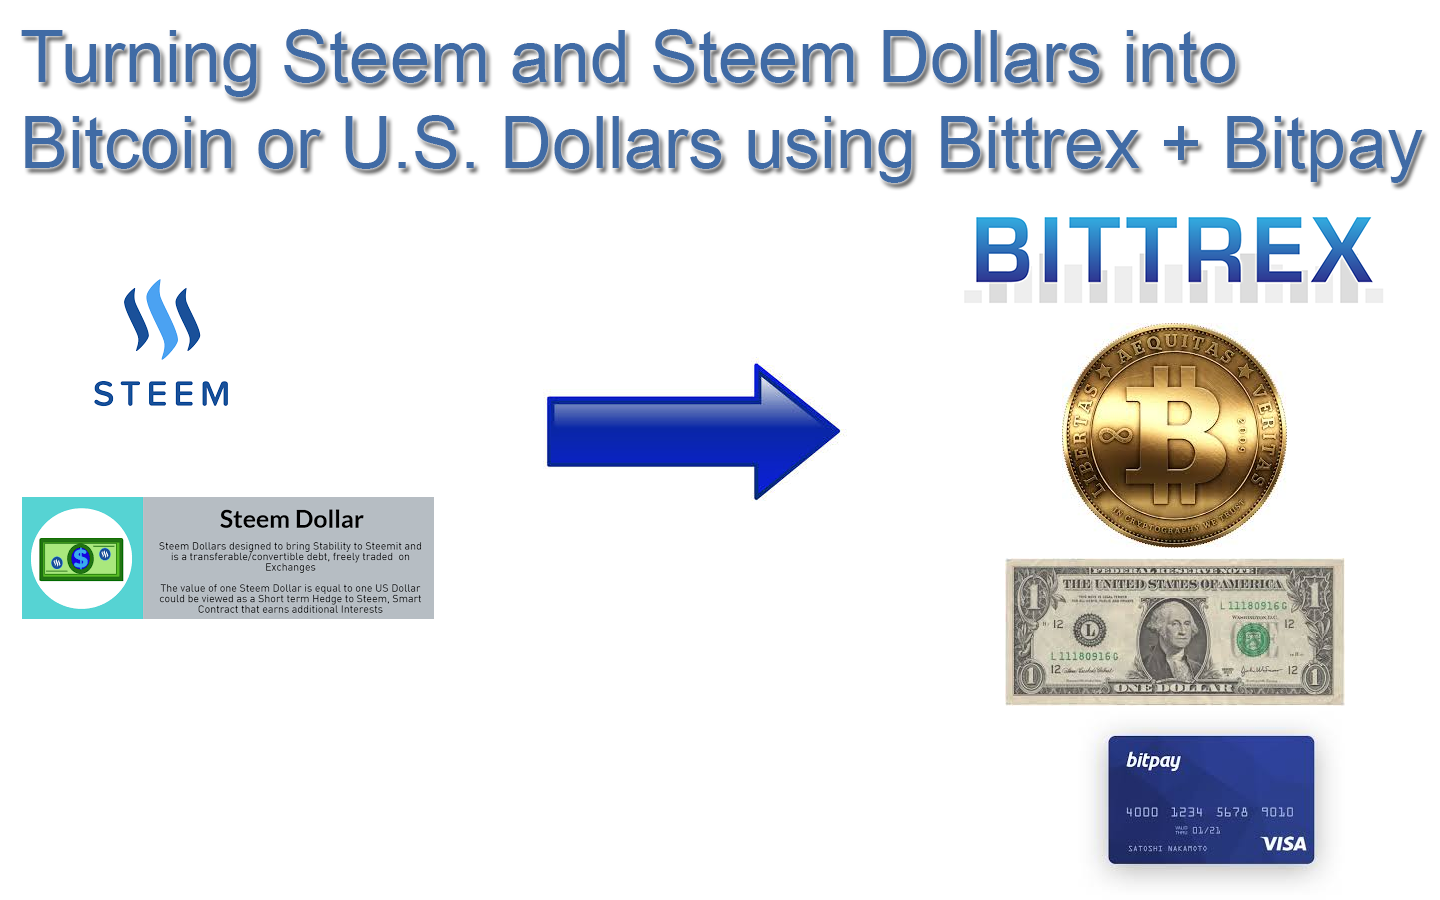 Bittrex buy bitcoin получить курс биткоина